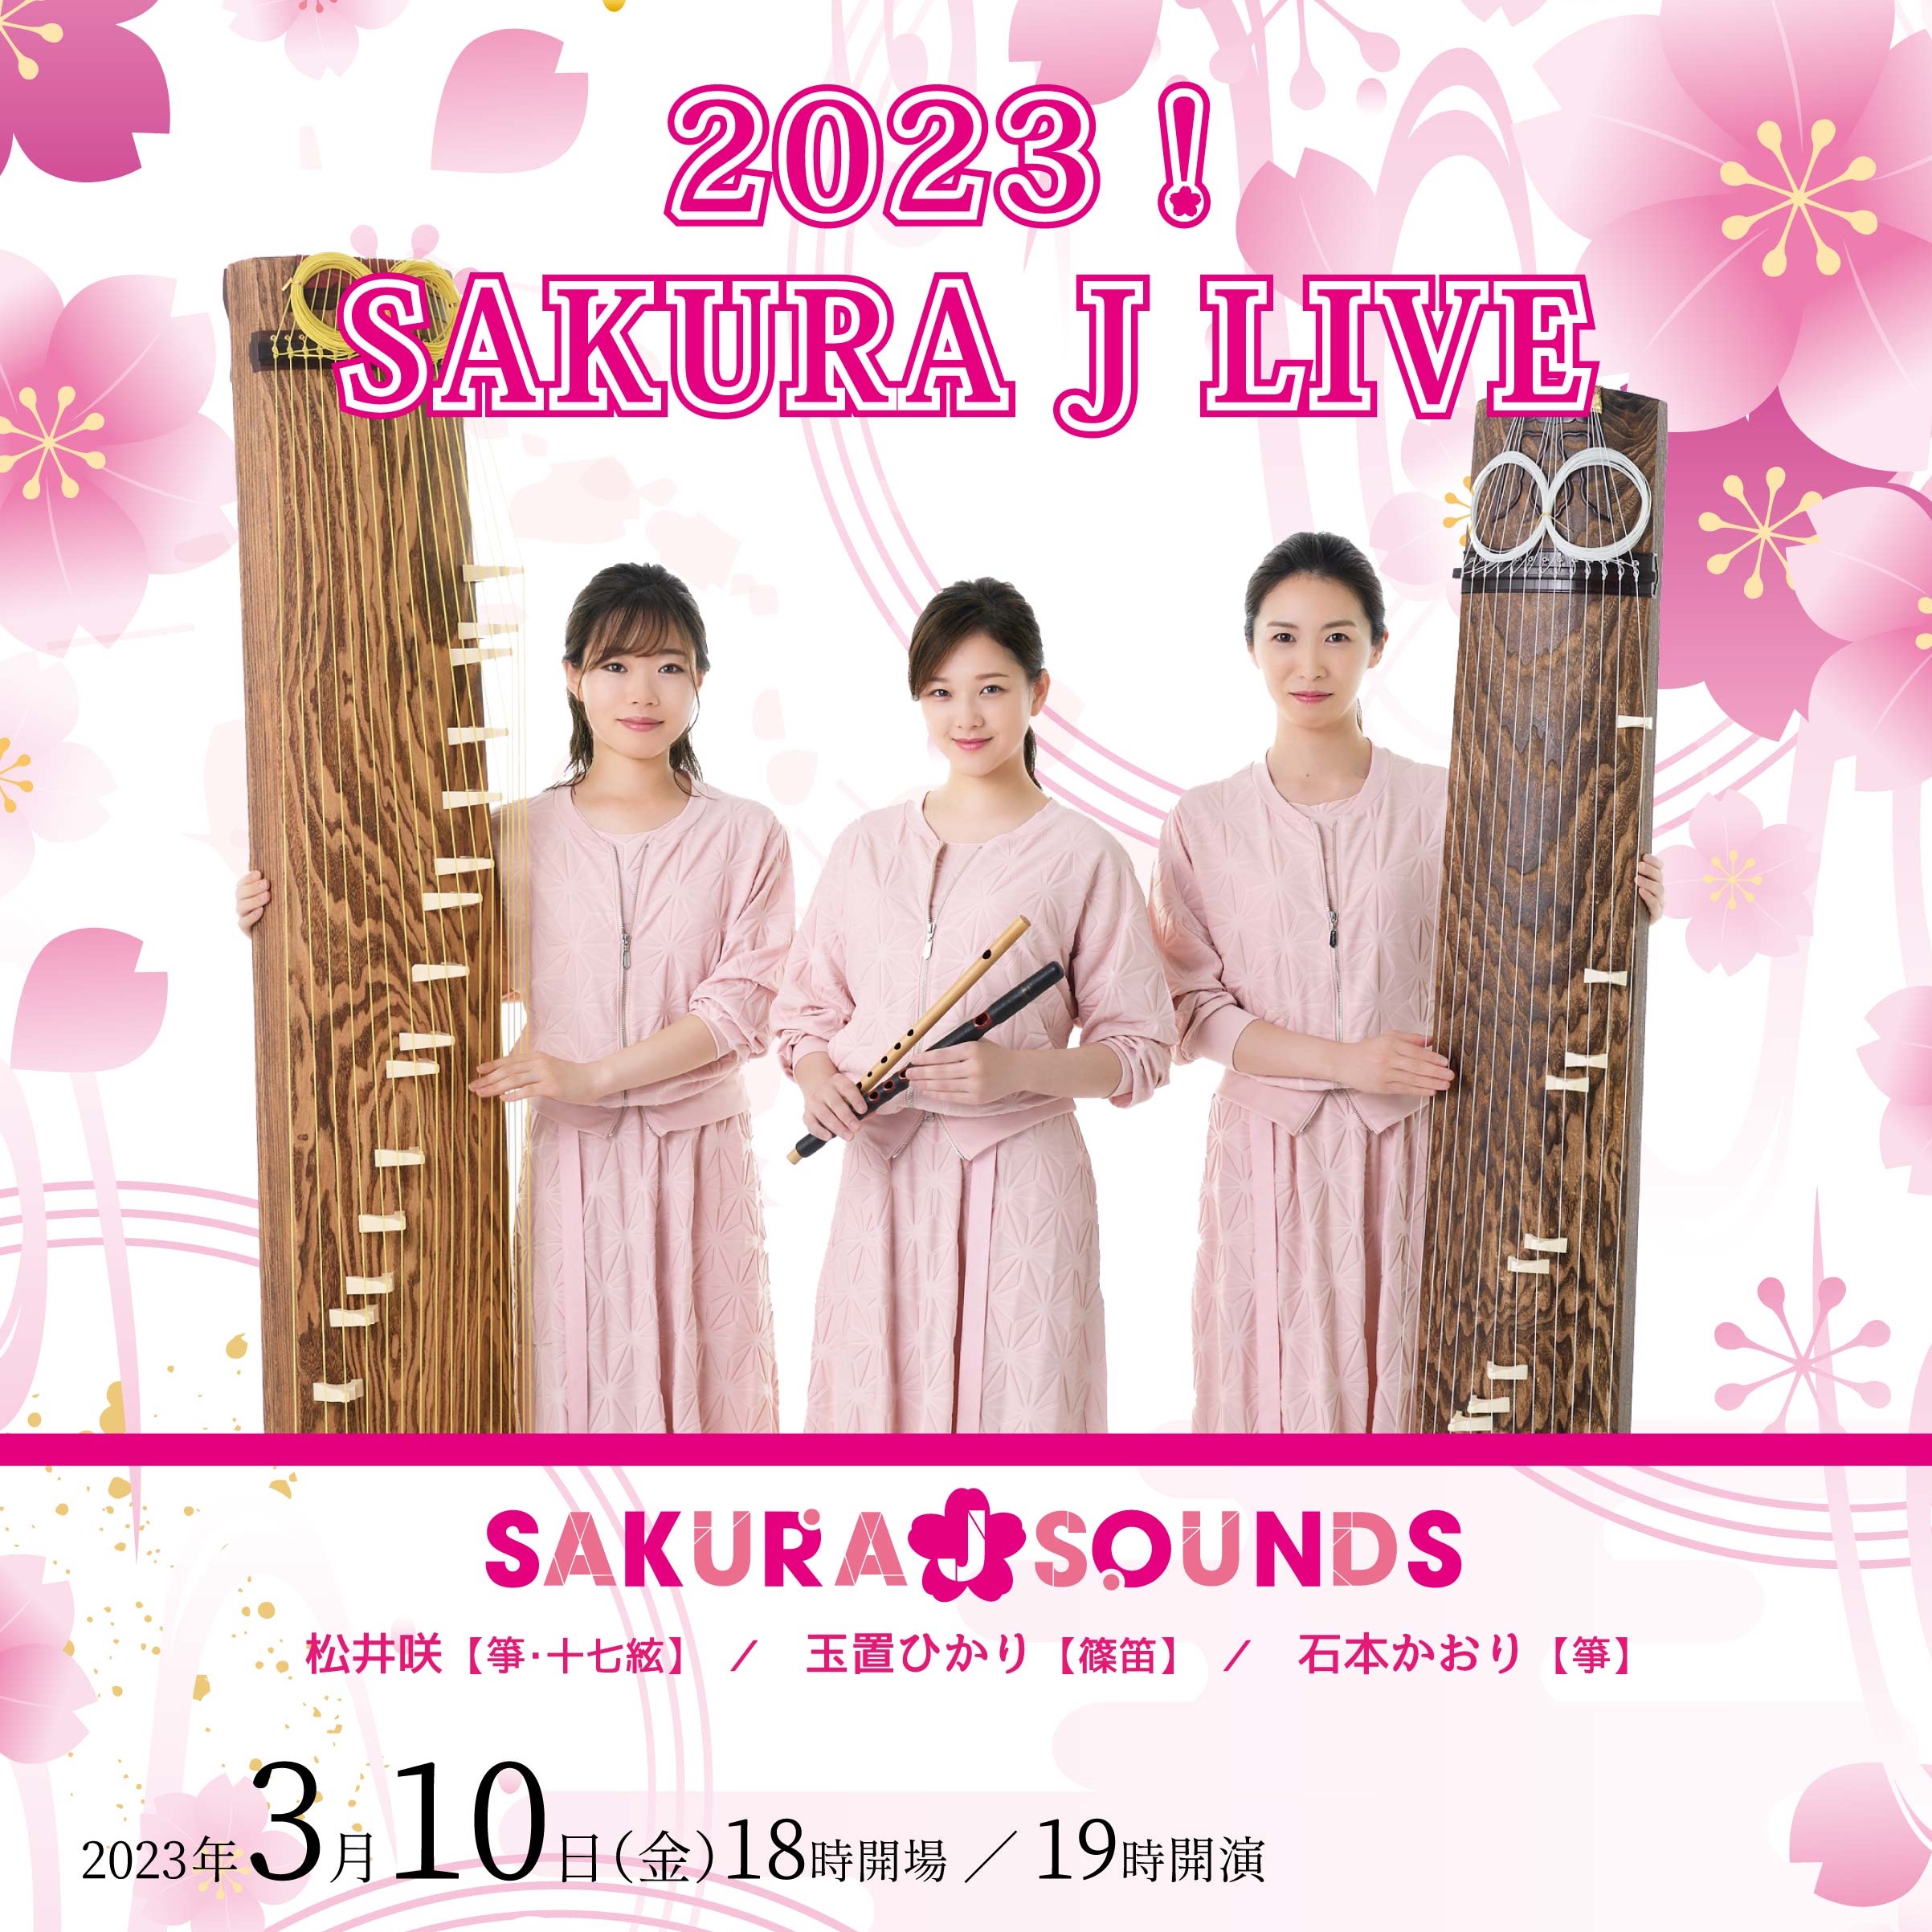 2023! SAKURA J LIVE SAKURA J SOUNDS《同時配信あり》